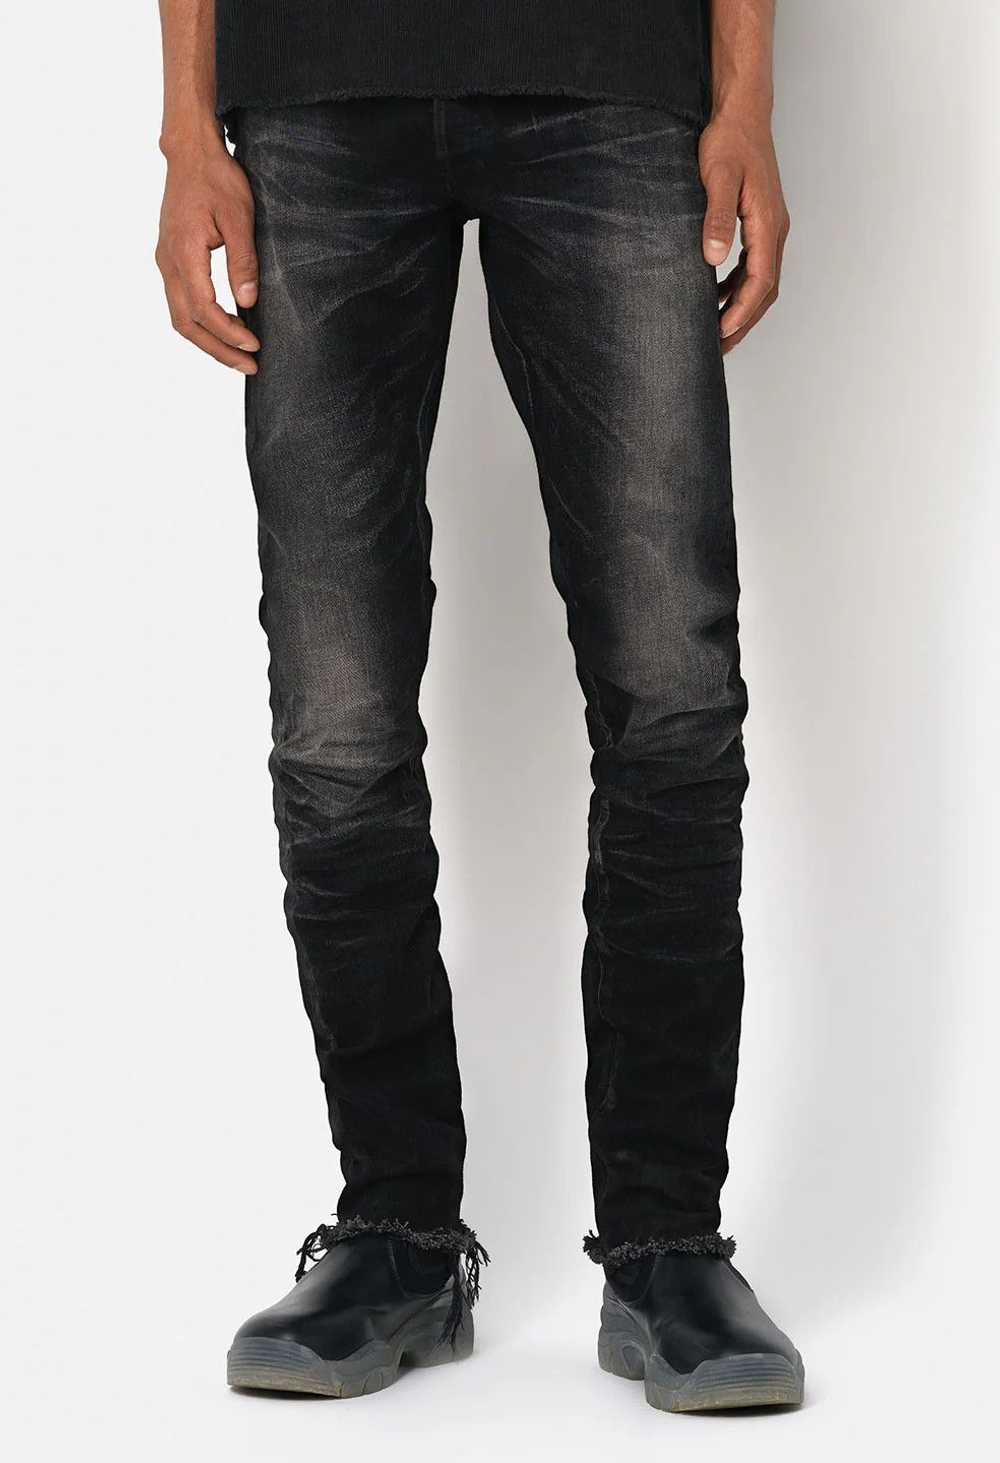 John Elliott Jeans, new with tags - image 6